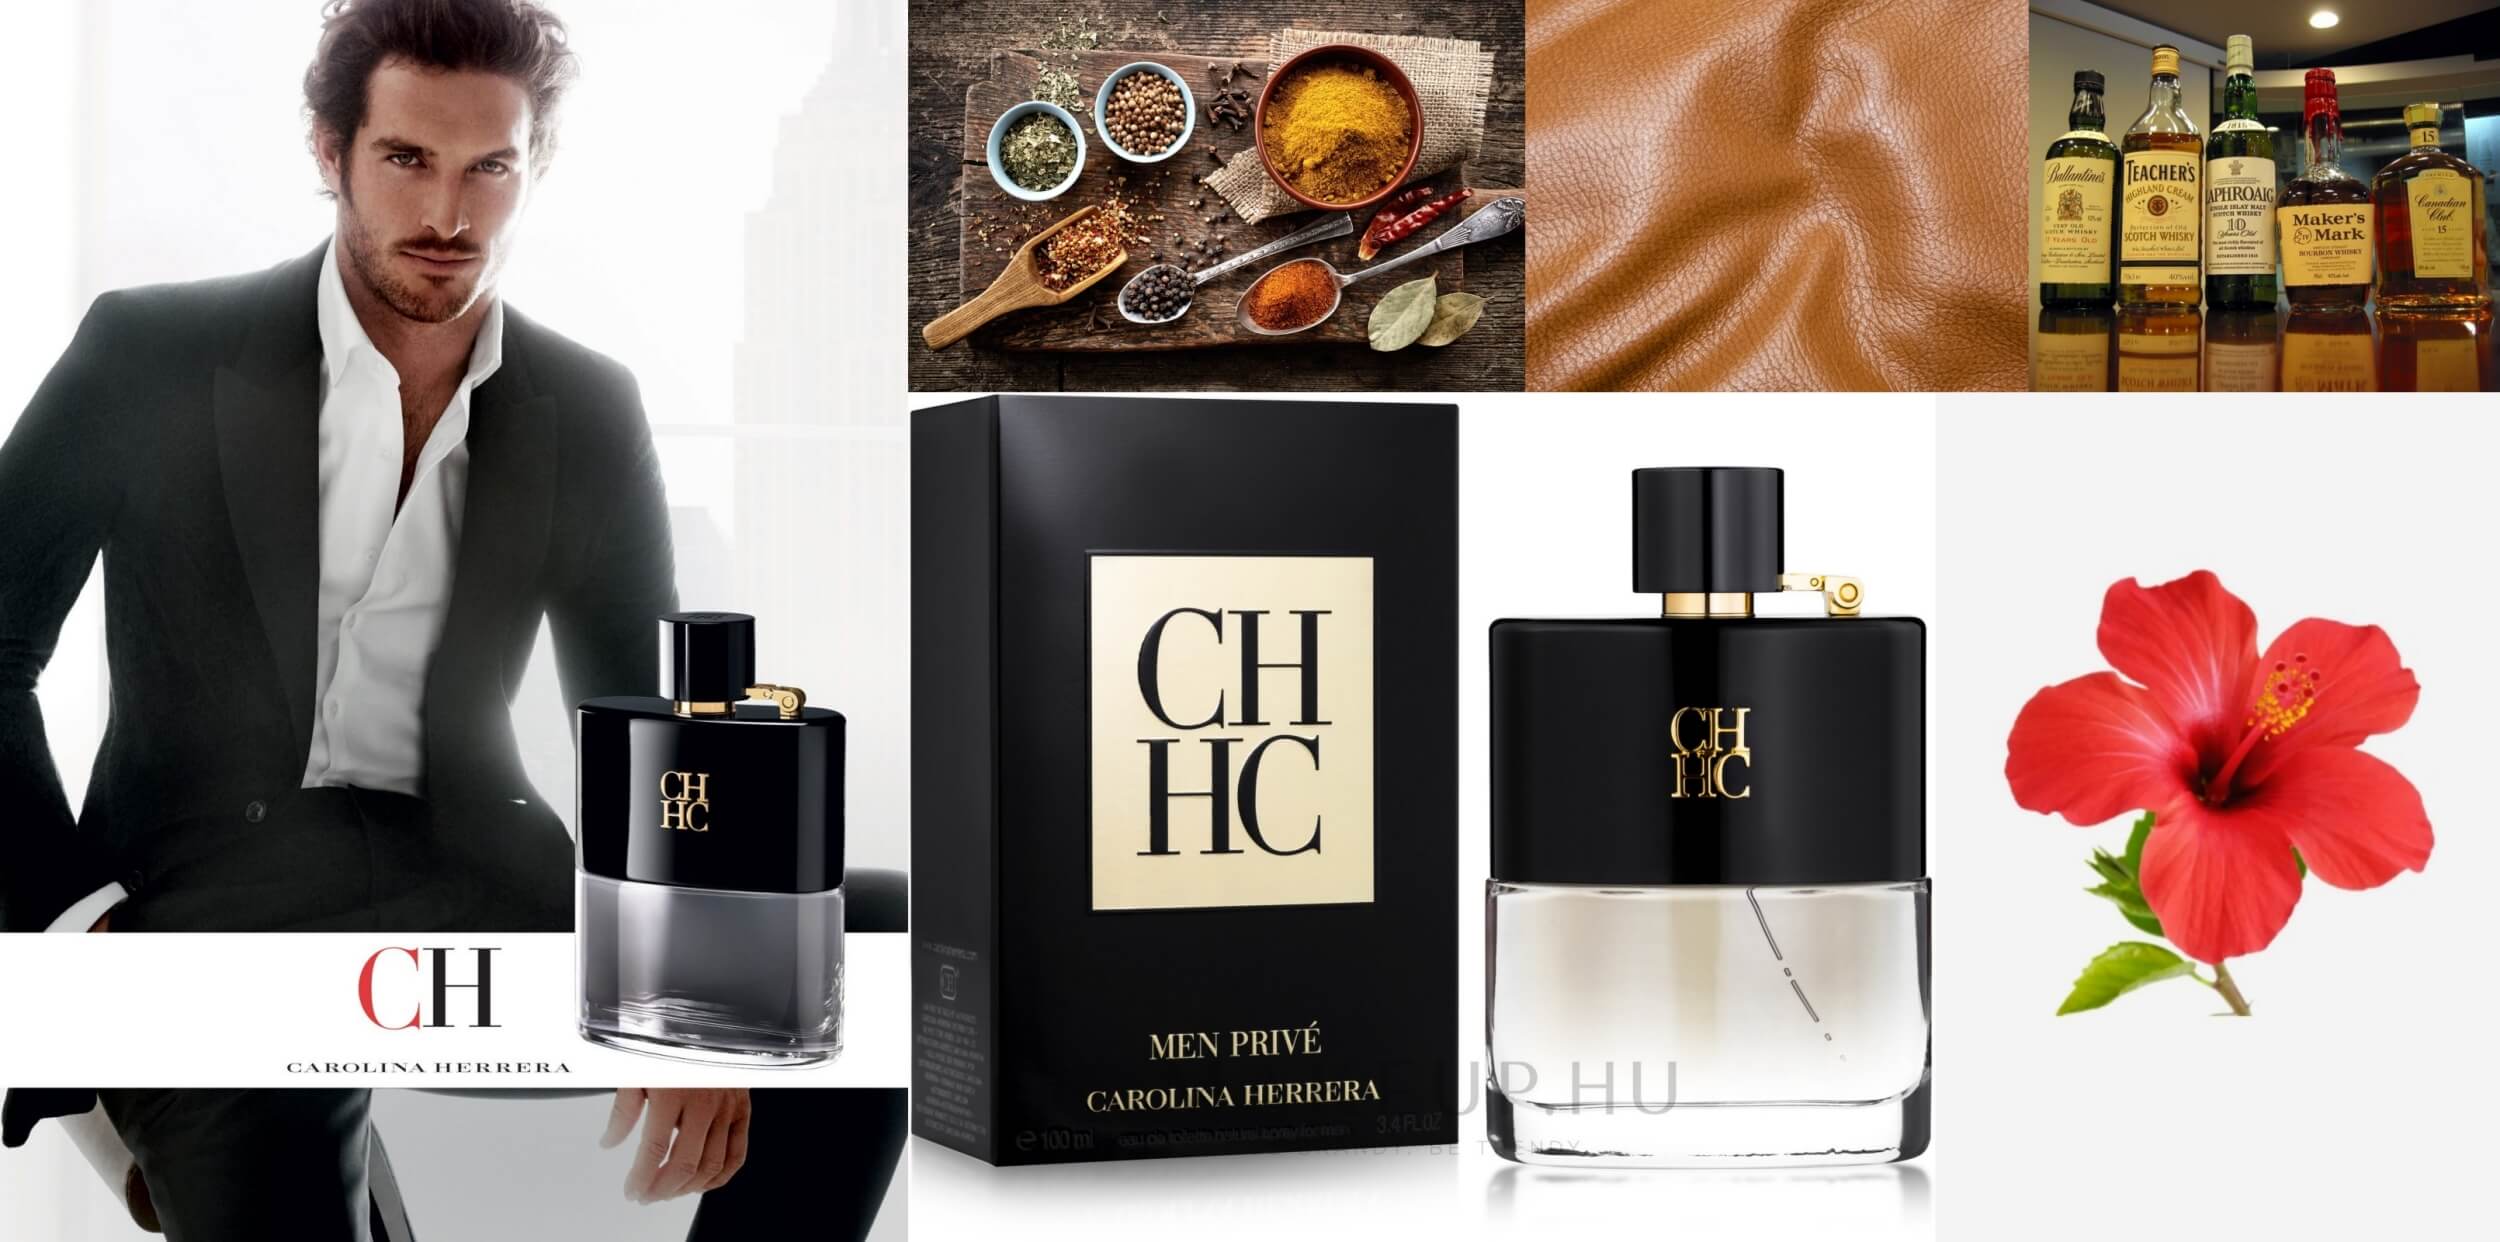 Carolina Herrera CH Men Prive perfume